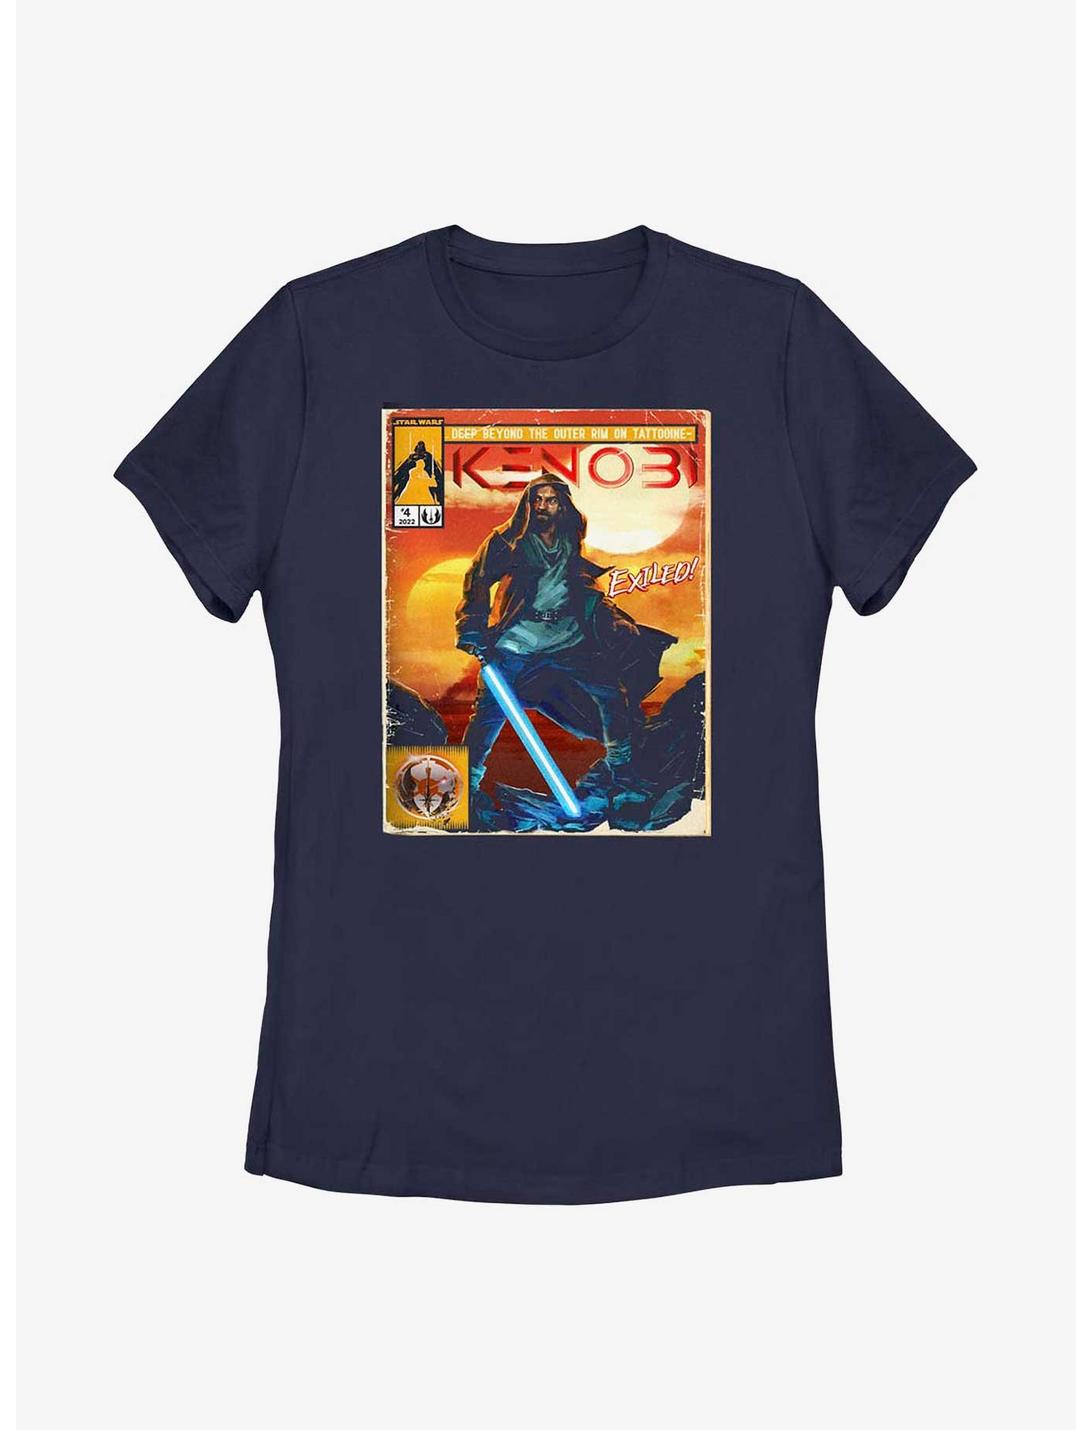 Star Wars Obi-Wan Kenobi Komically Womens T-Shirt, NAVY, hi-res